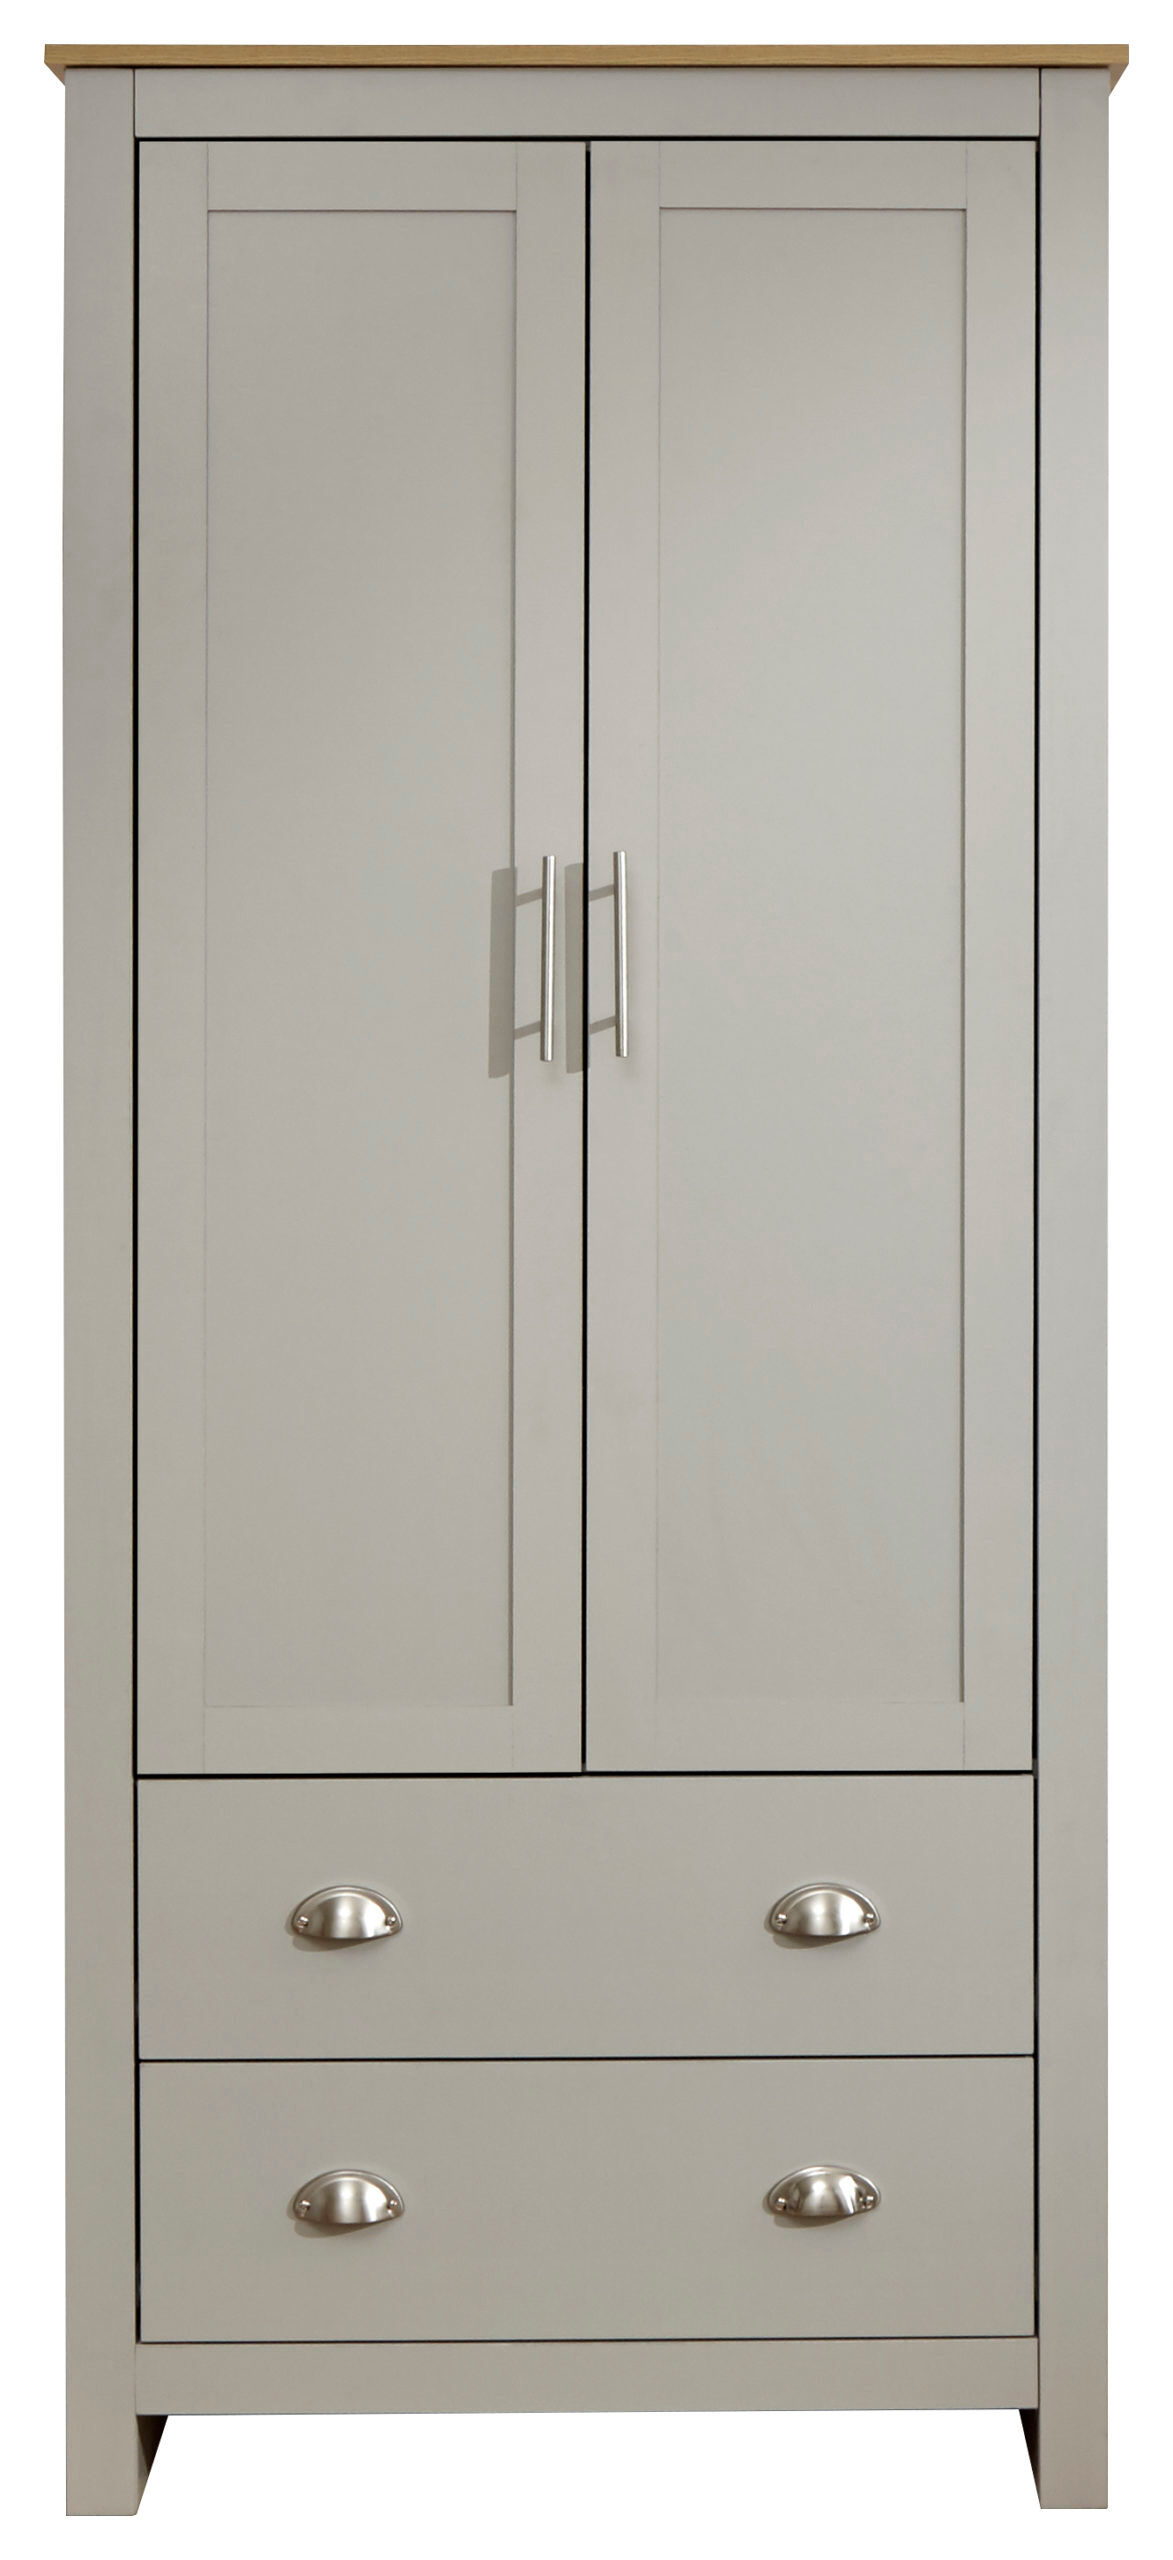 Fife Grey 2 Door 2 Drawer Wardrobe   Grey   Self Assembly